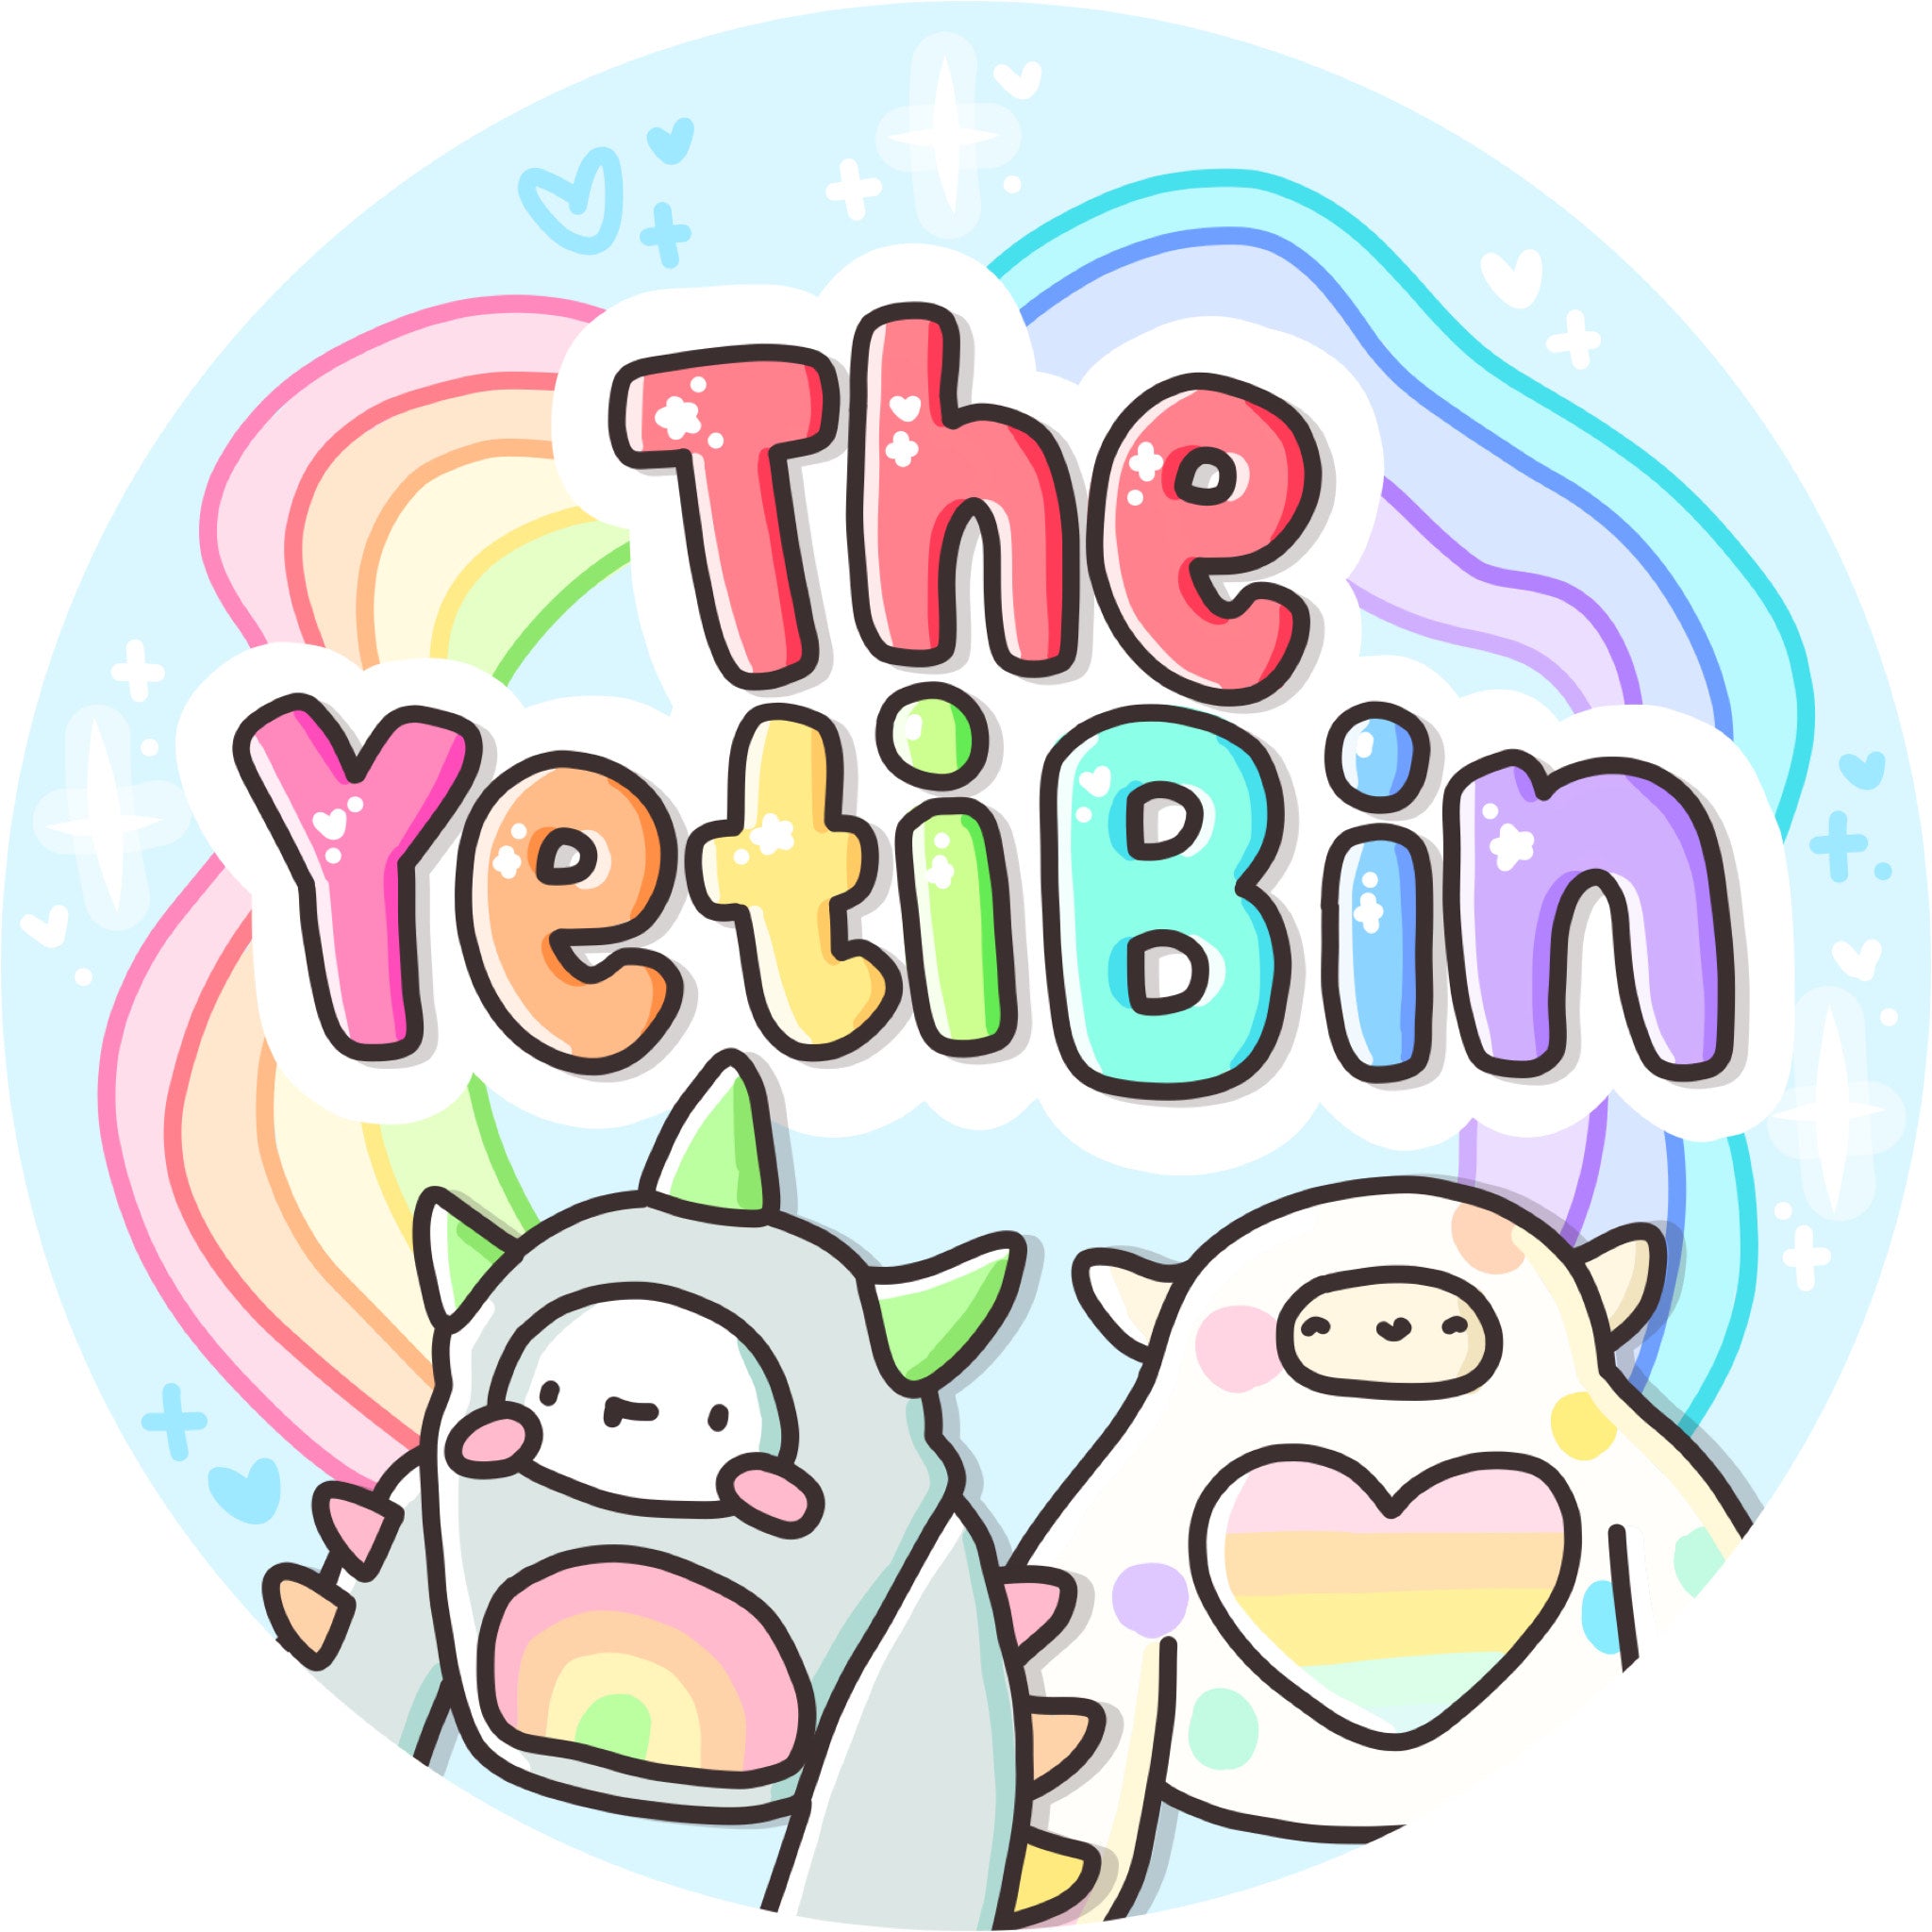 The Yeti Bin